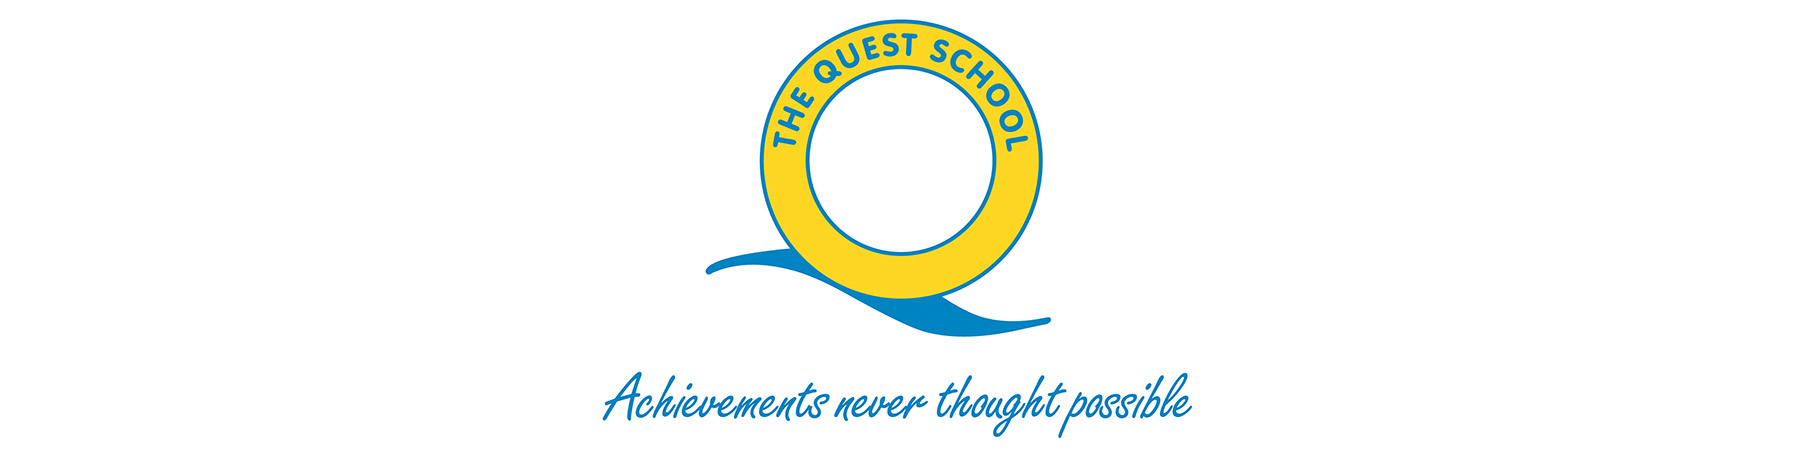 The Quest School